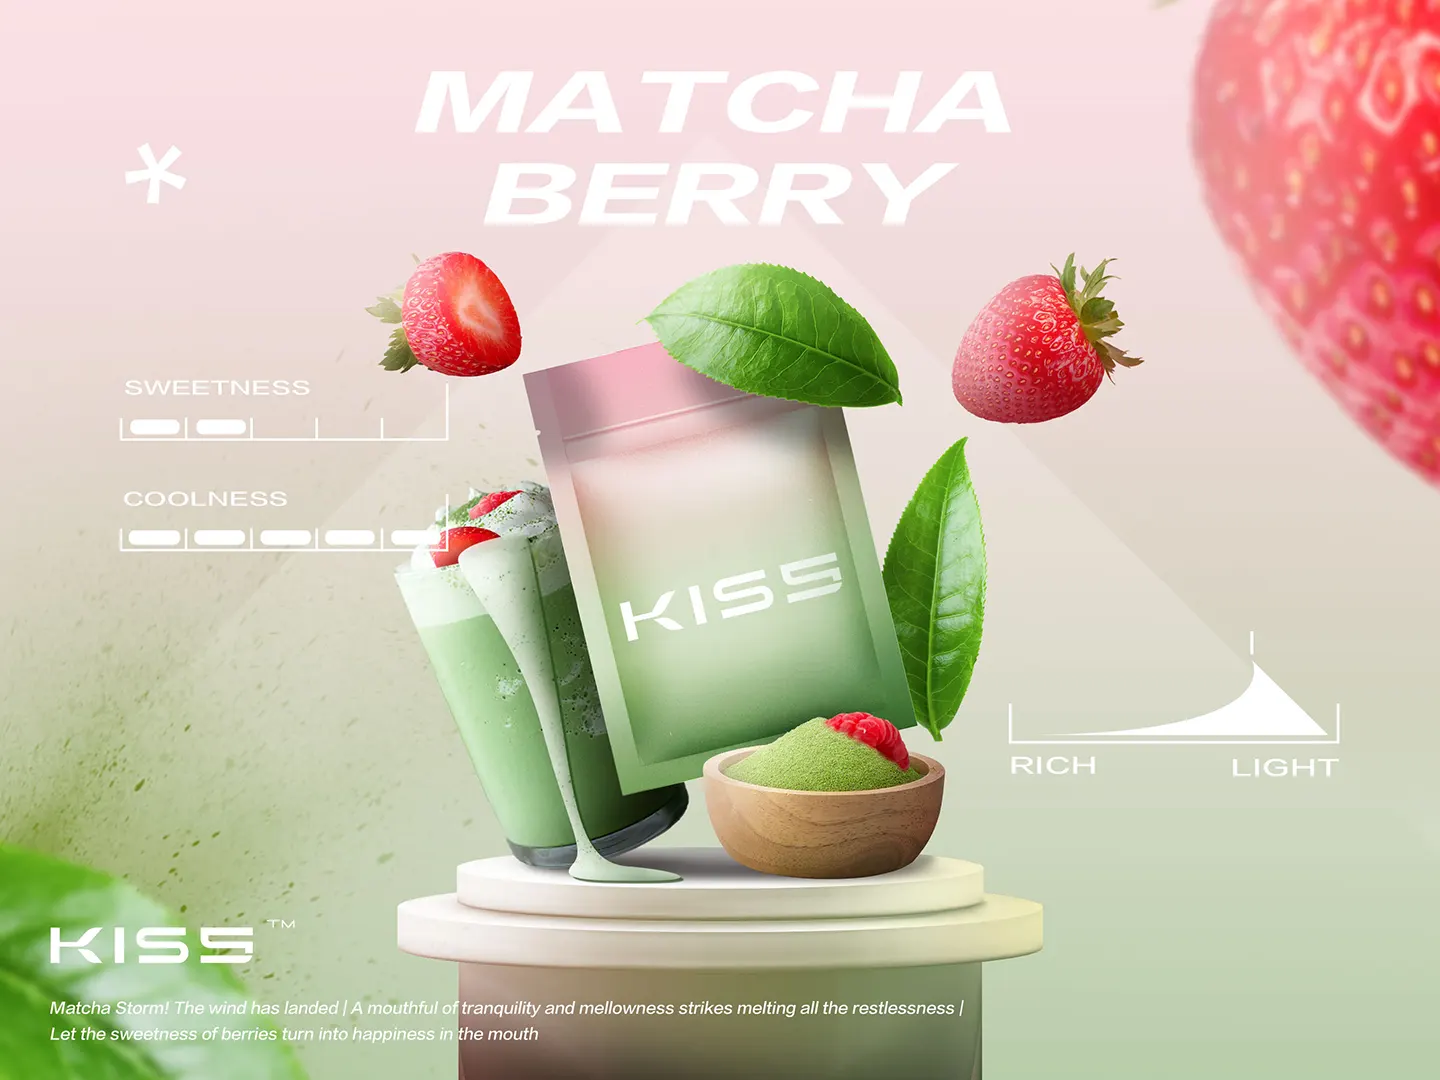 kis5-matcha-berry_43